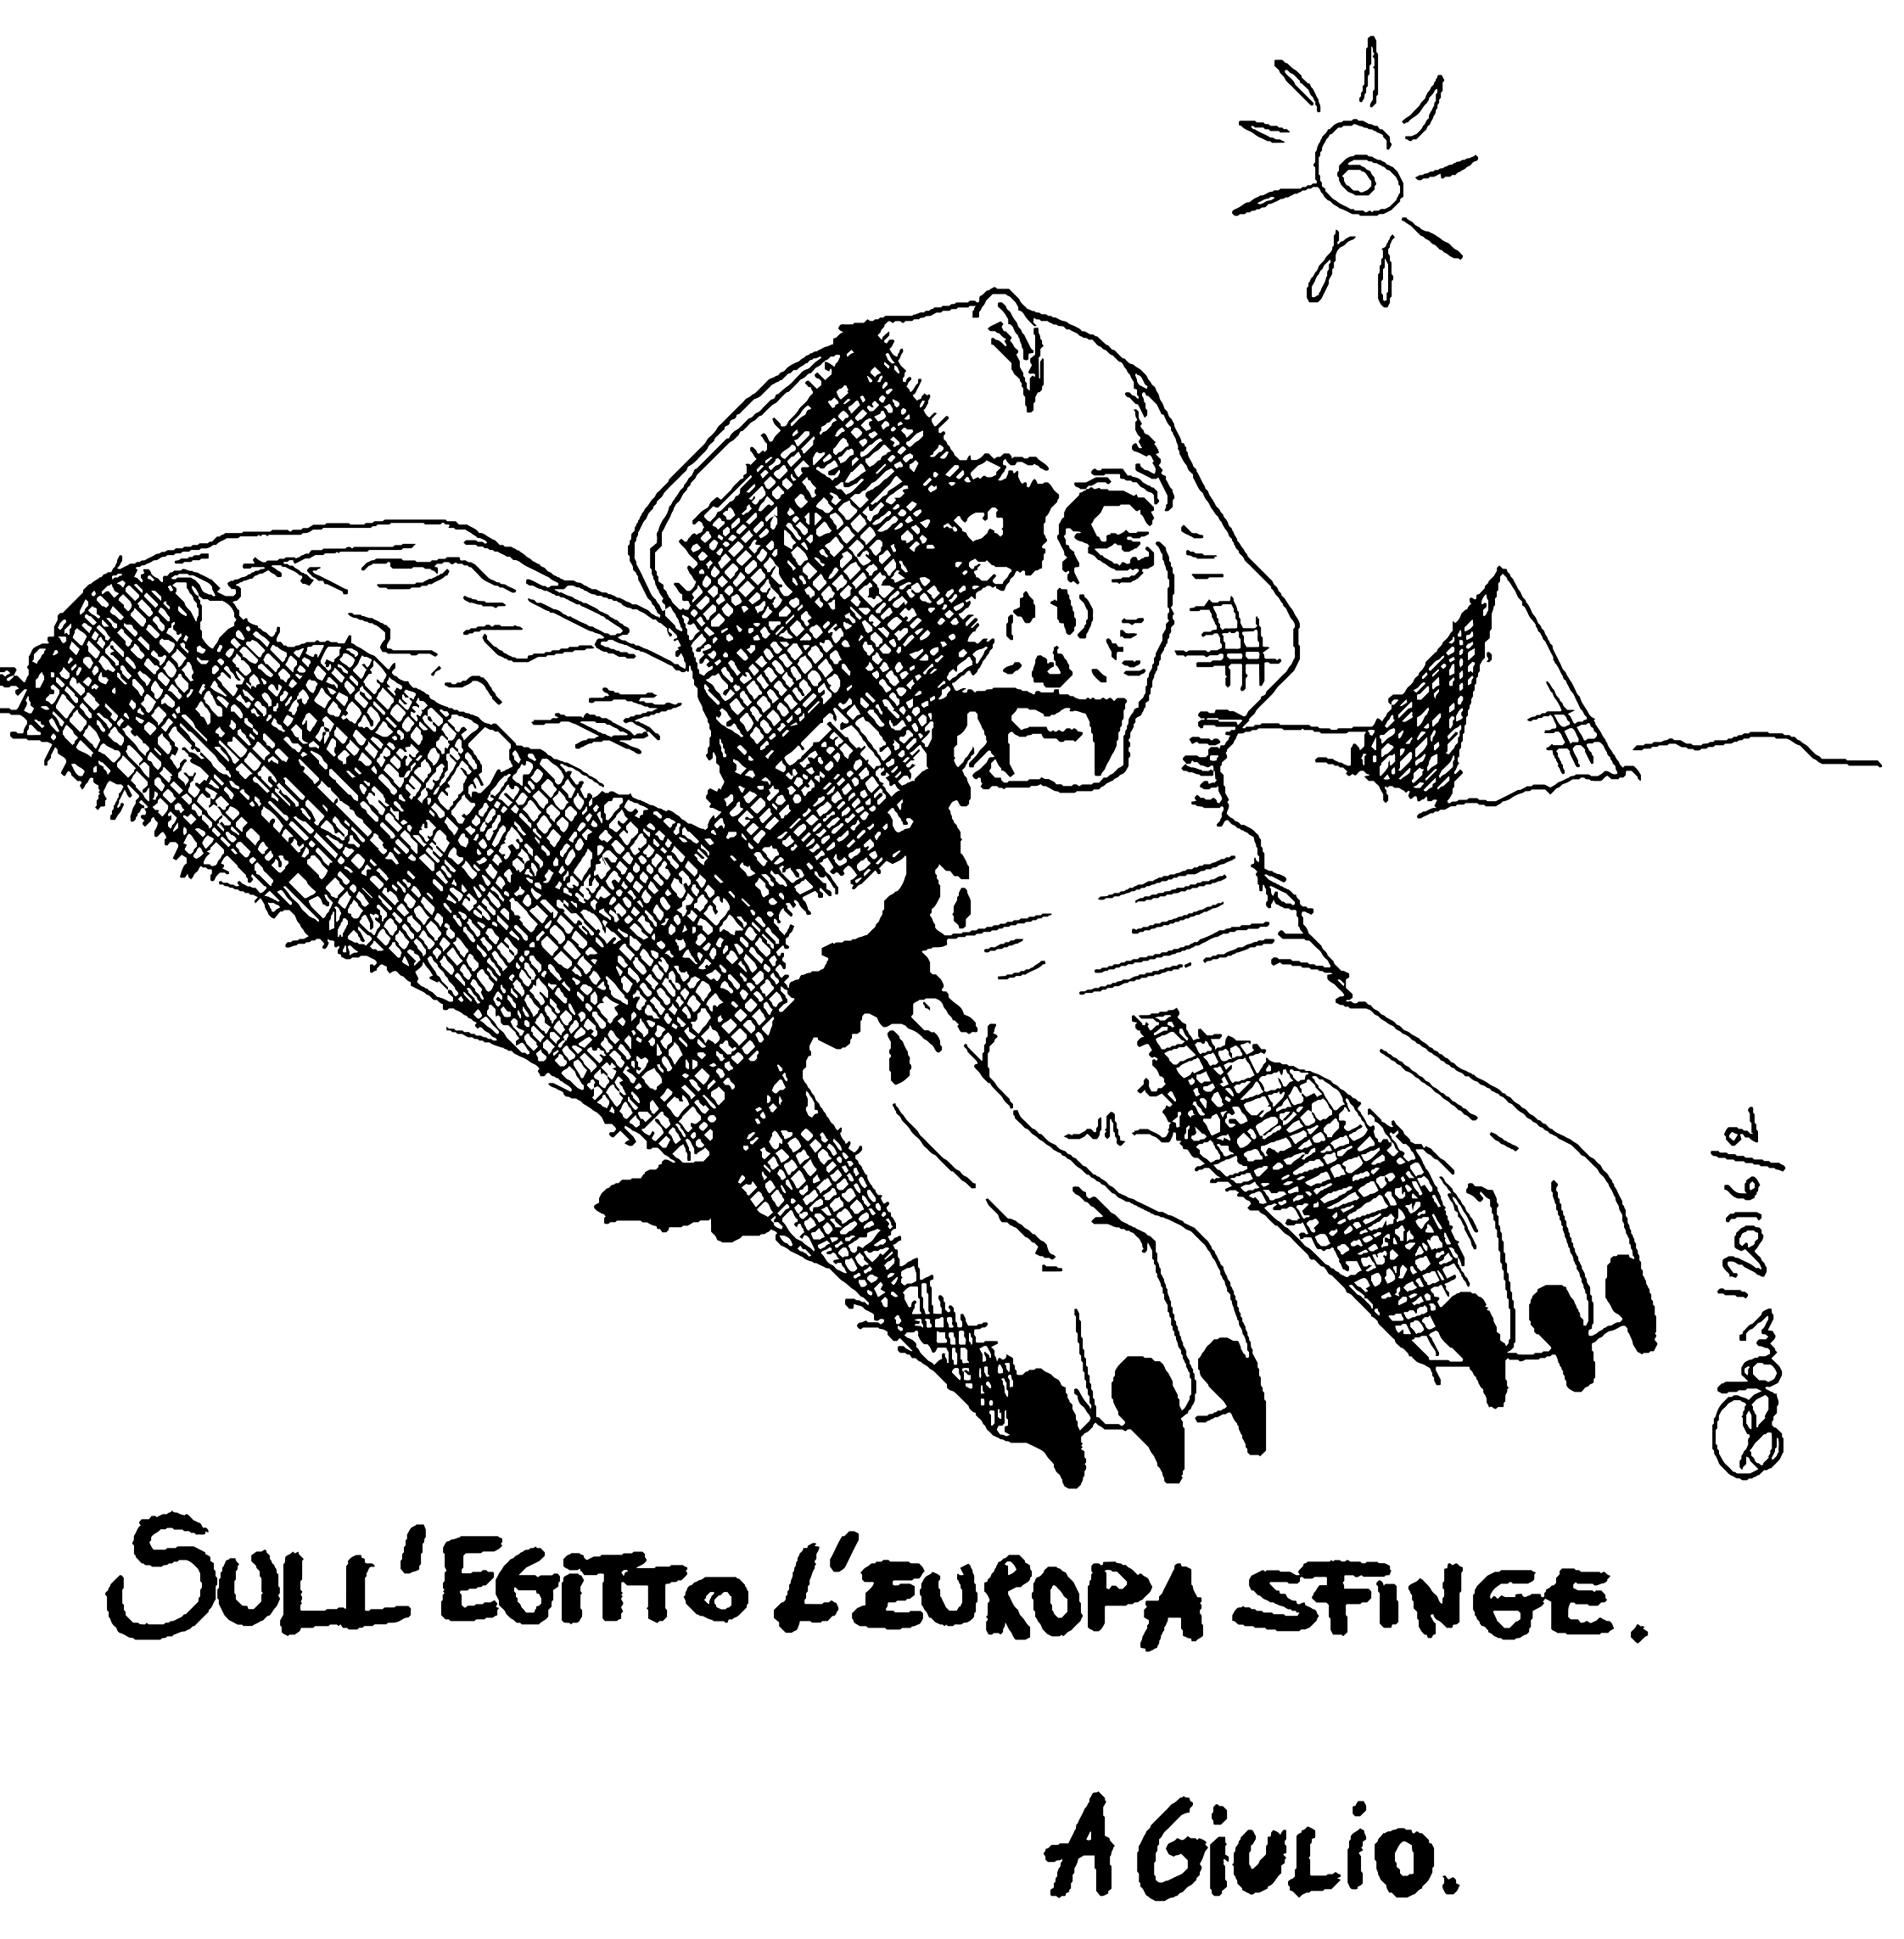 A Giulio